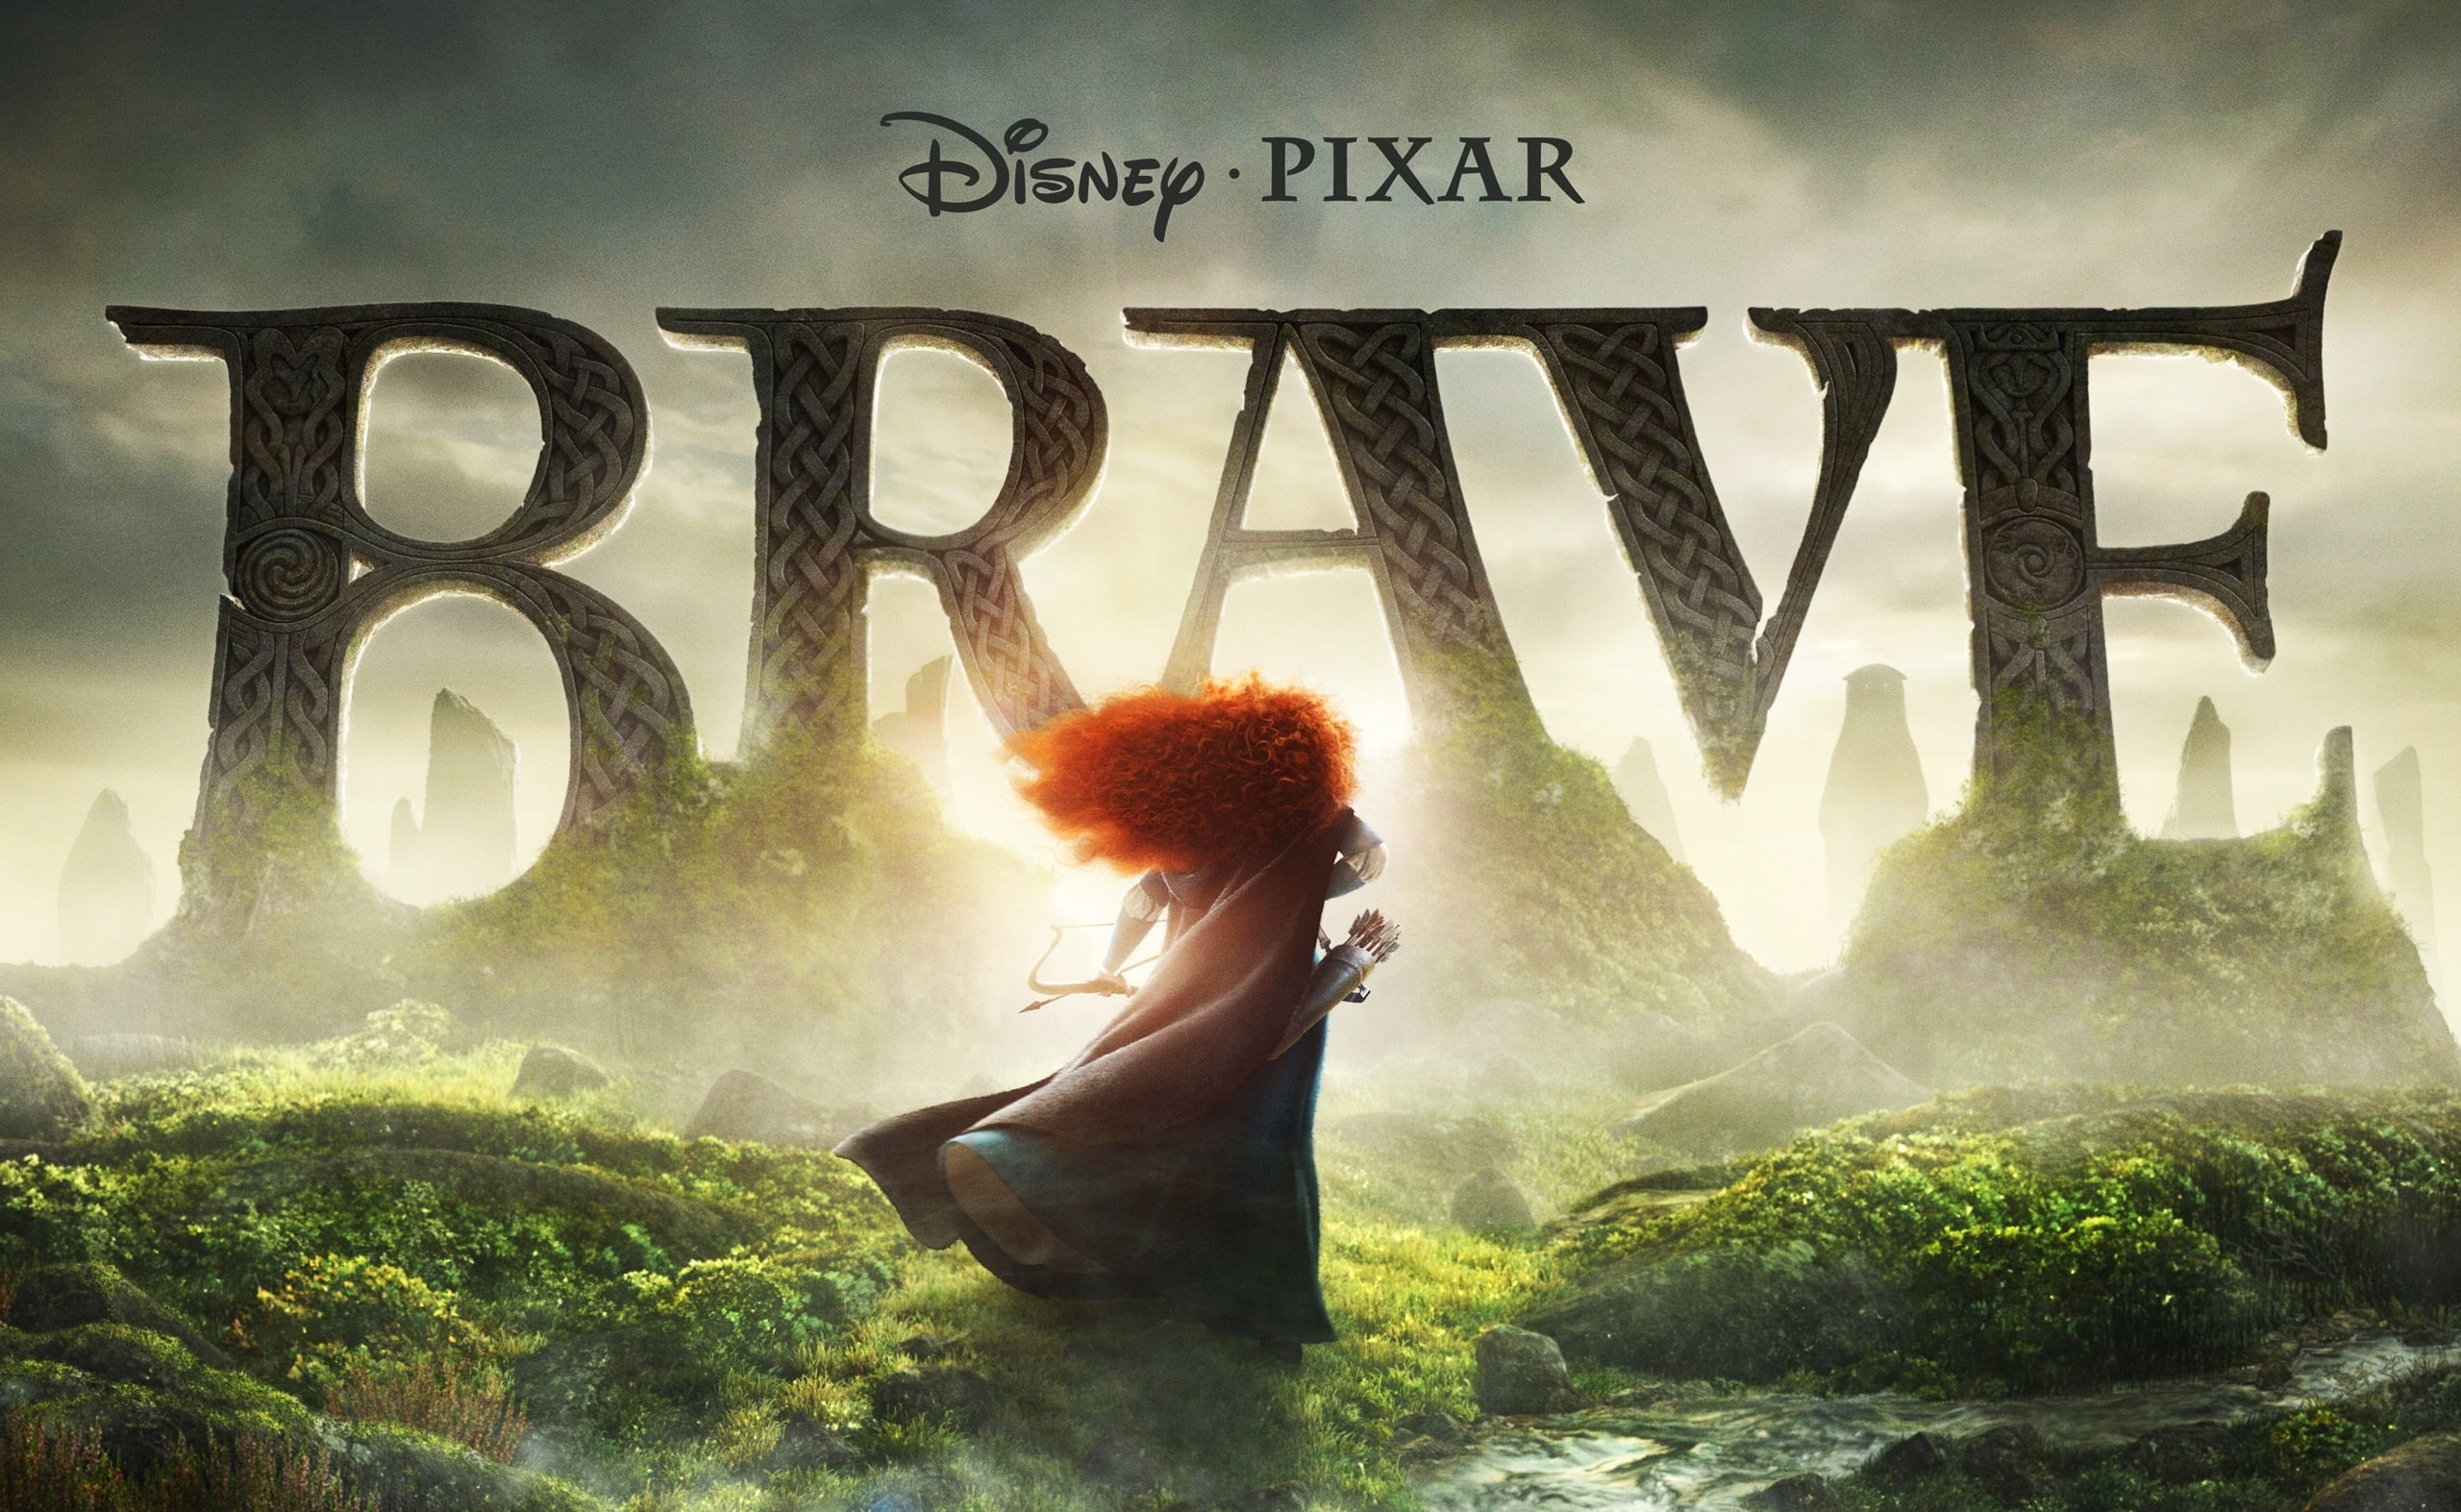 Brave, Disney Pixar Brave wallpaper, Cartoons, animation movie